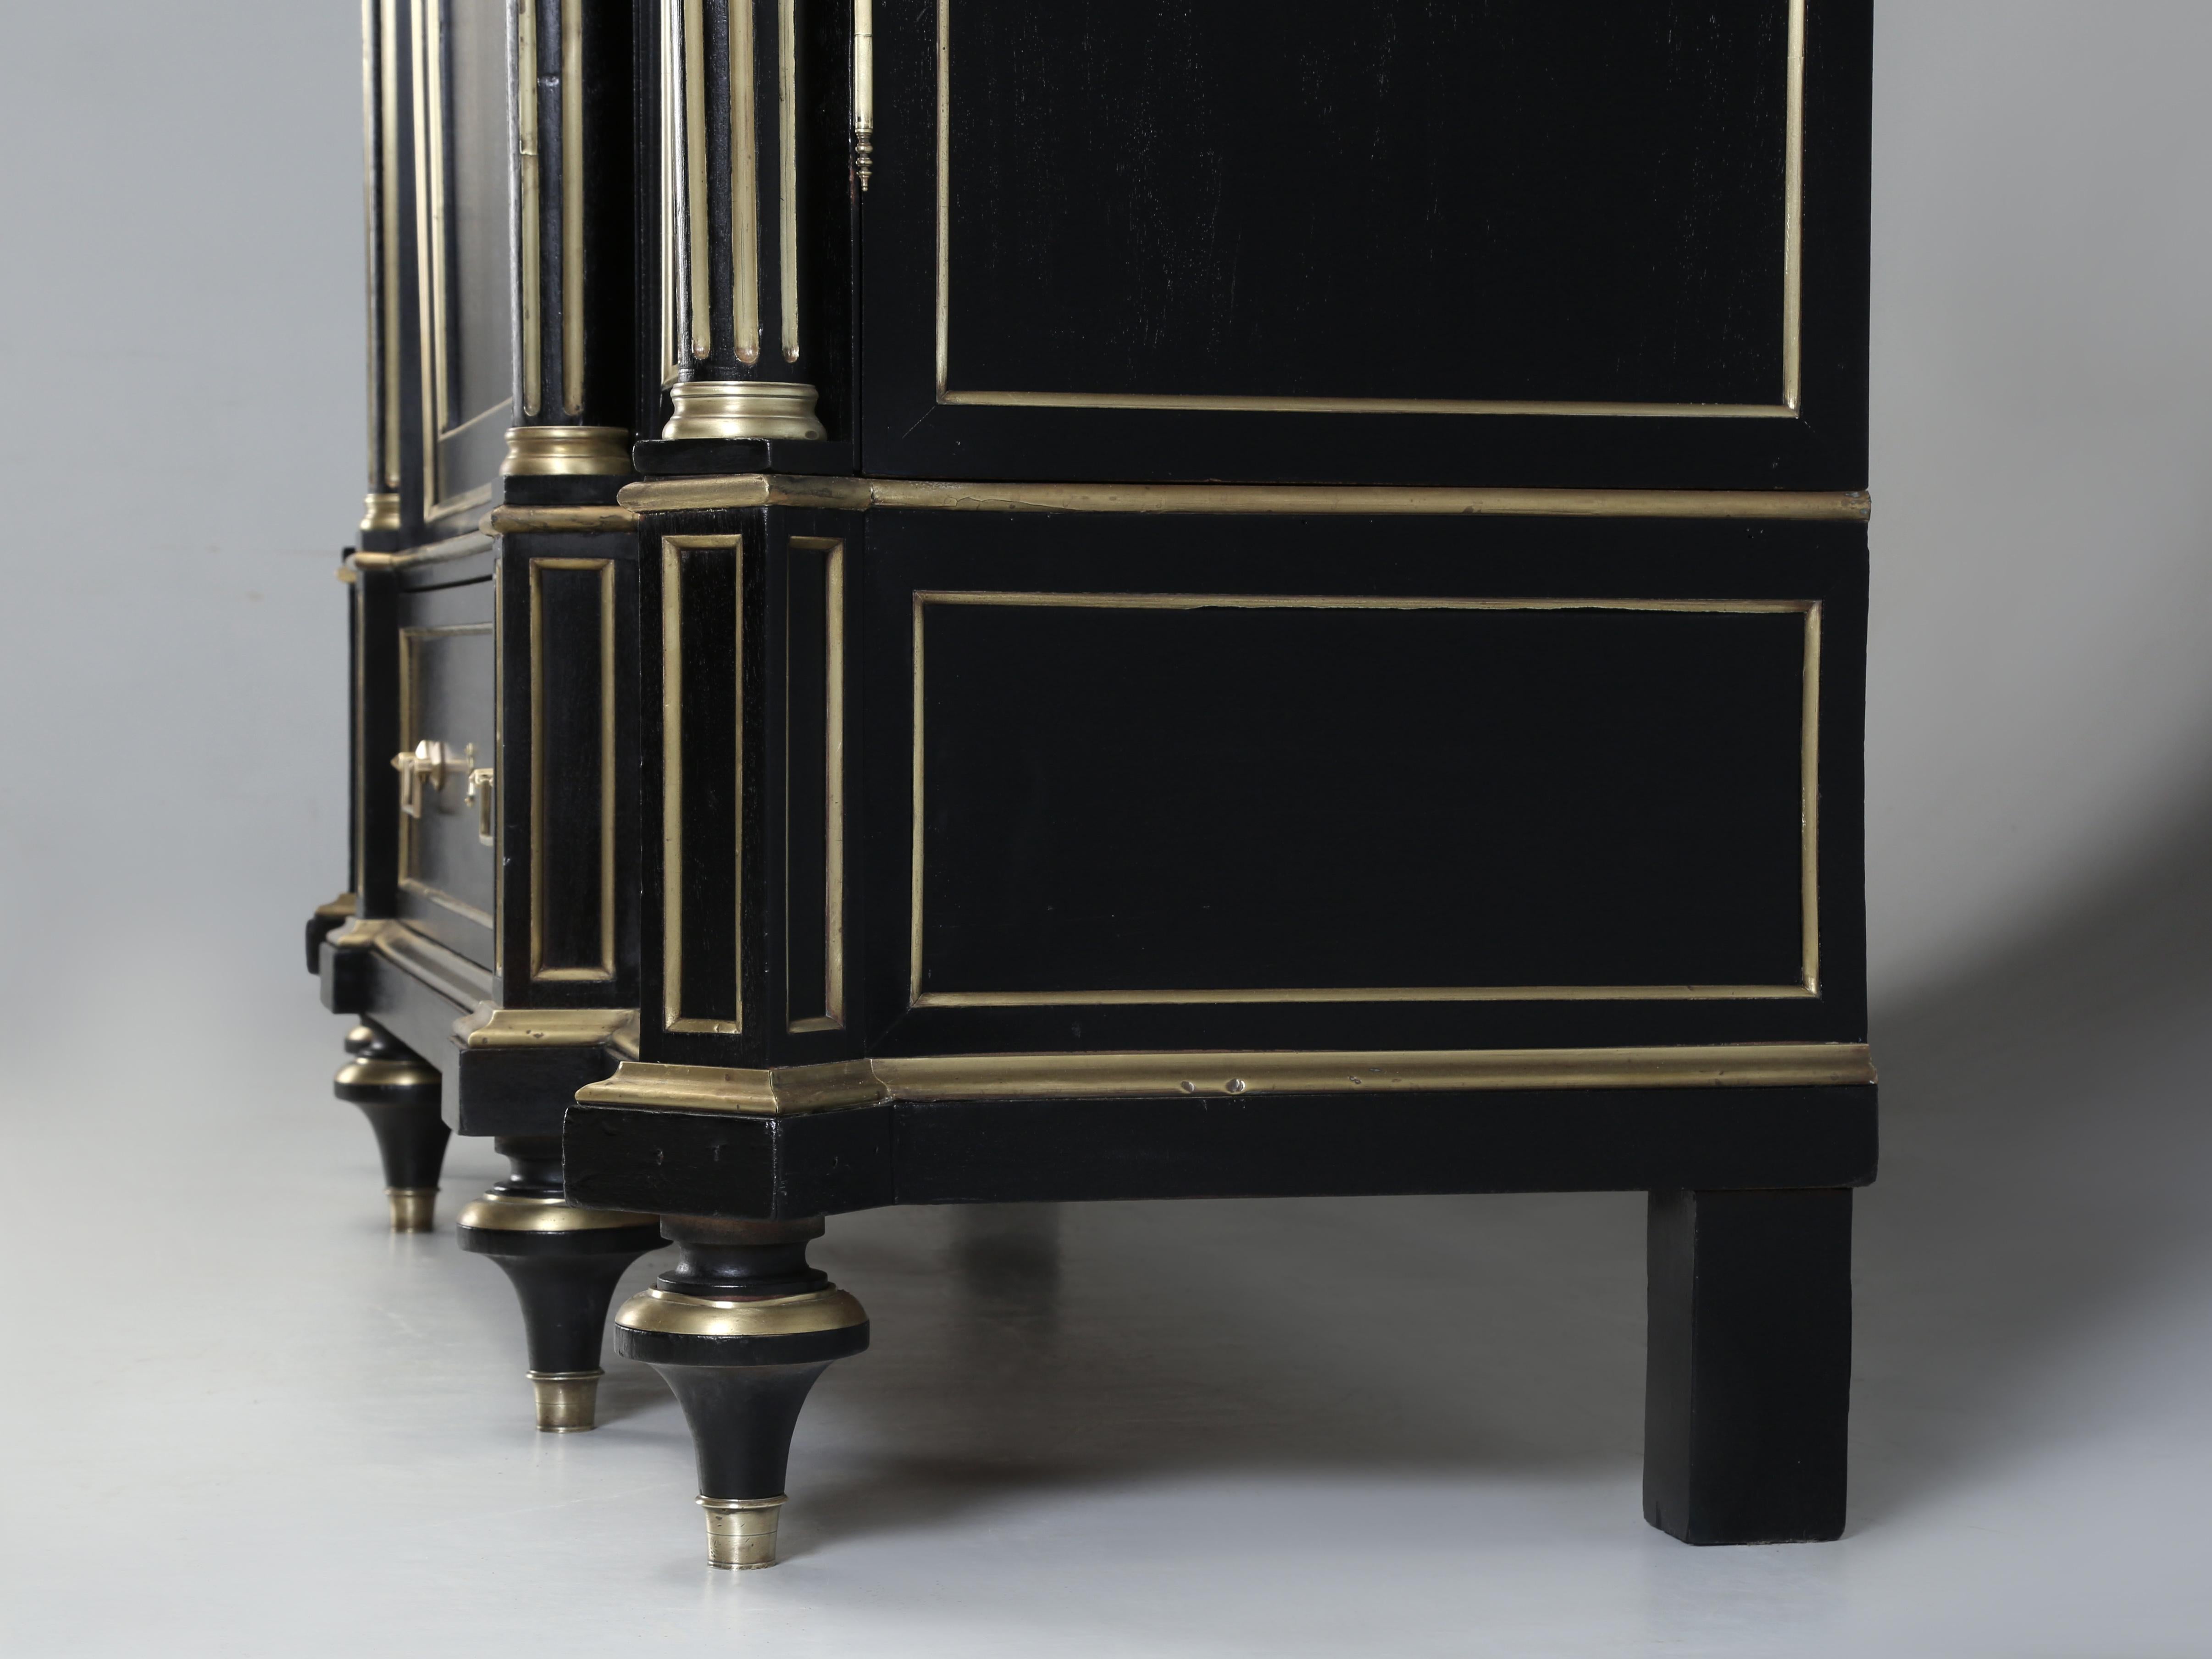 French Louis XVI Style Ebonized Mahogany Bookcase, Armoire Restored c1800's For Sale 5